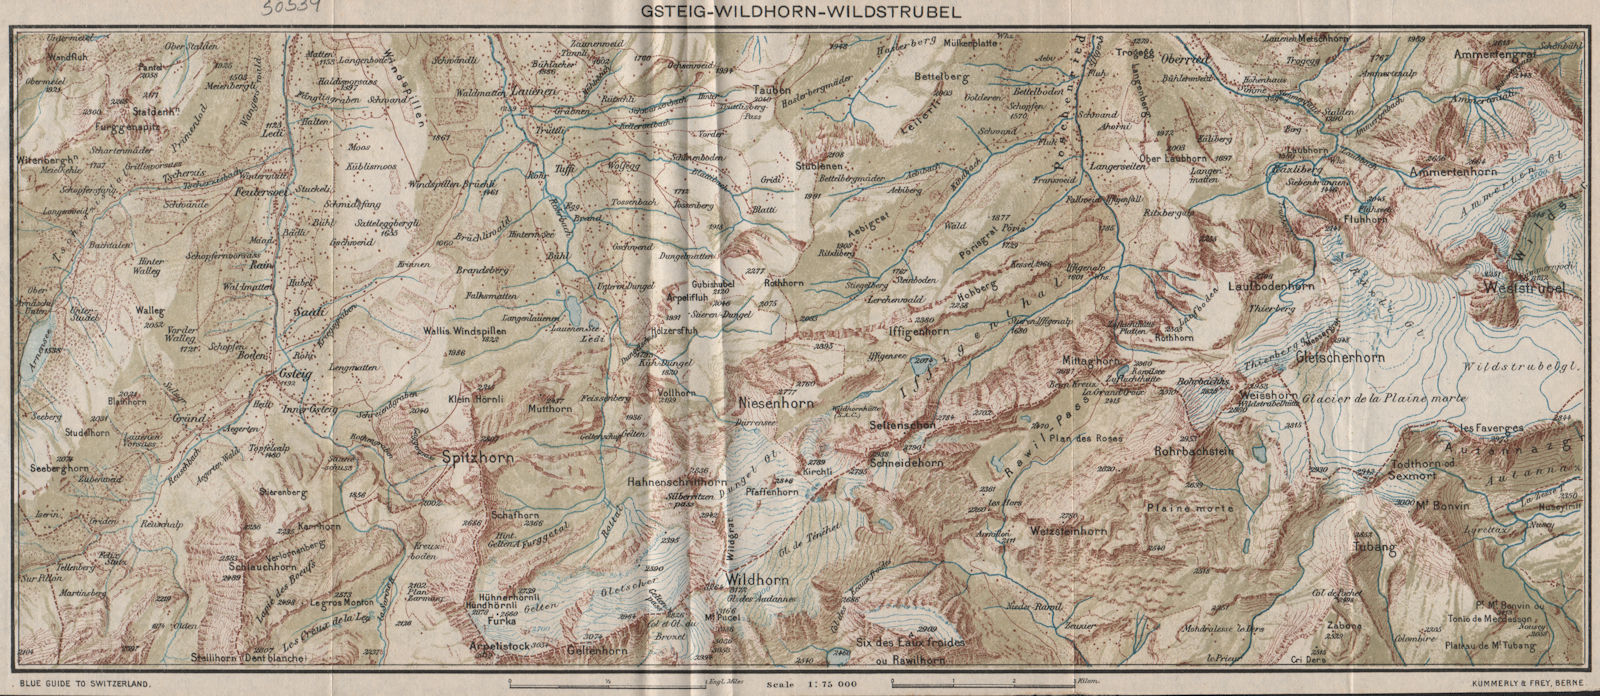 Associate Product BERNER OBERLAND. Gsteig Wildhorn Wildstrudel Lauenen Spitzhorn. Vintage map 1930